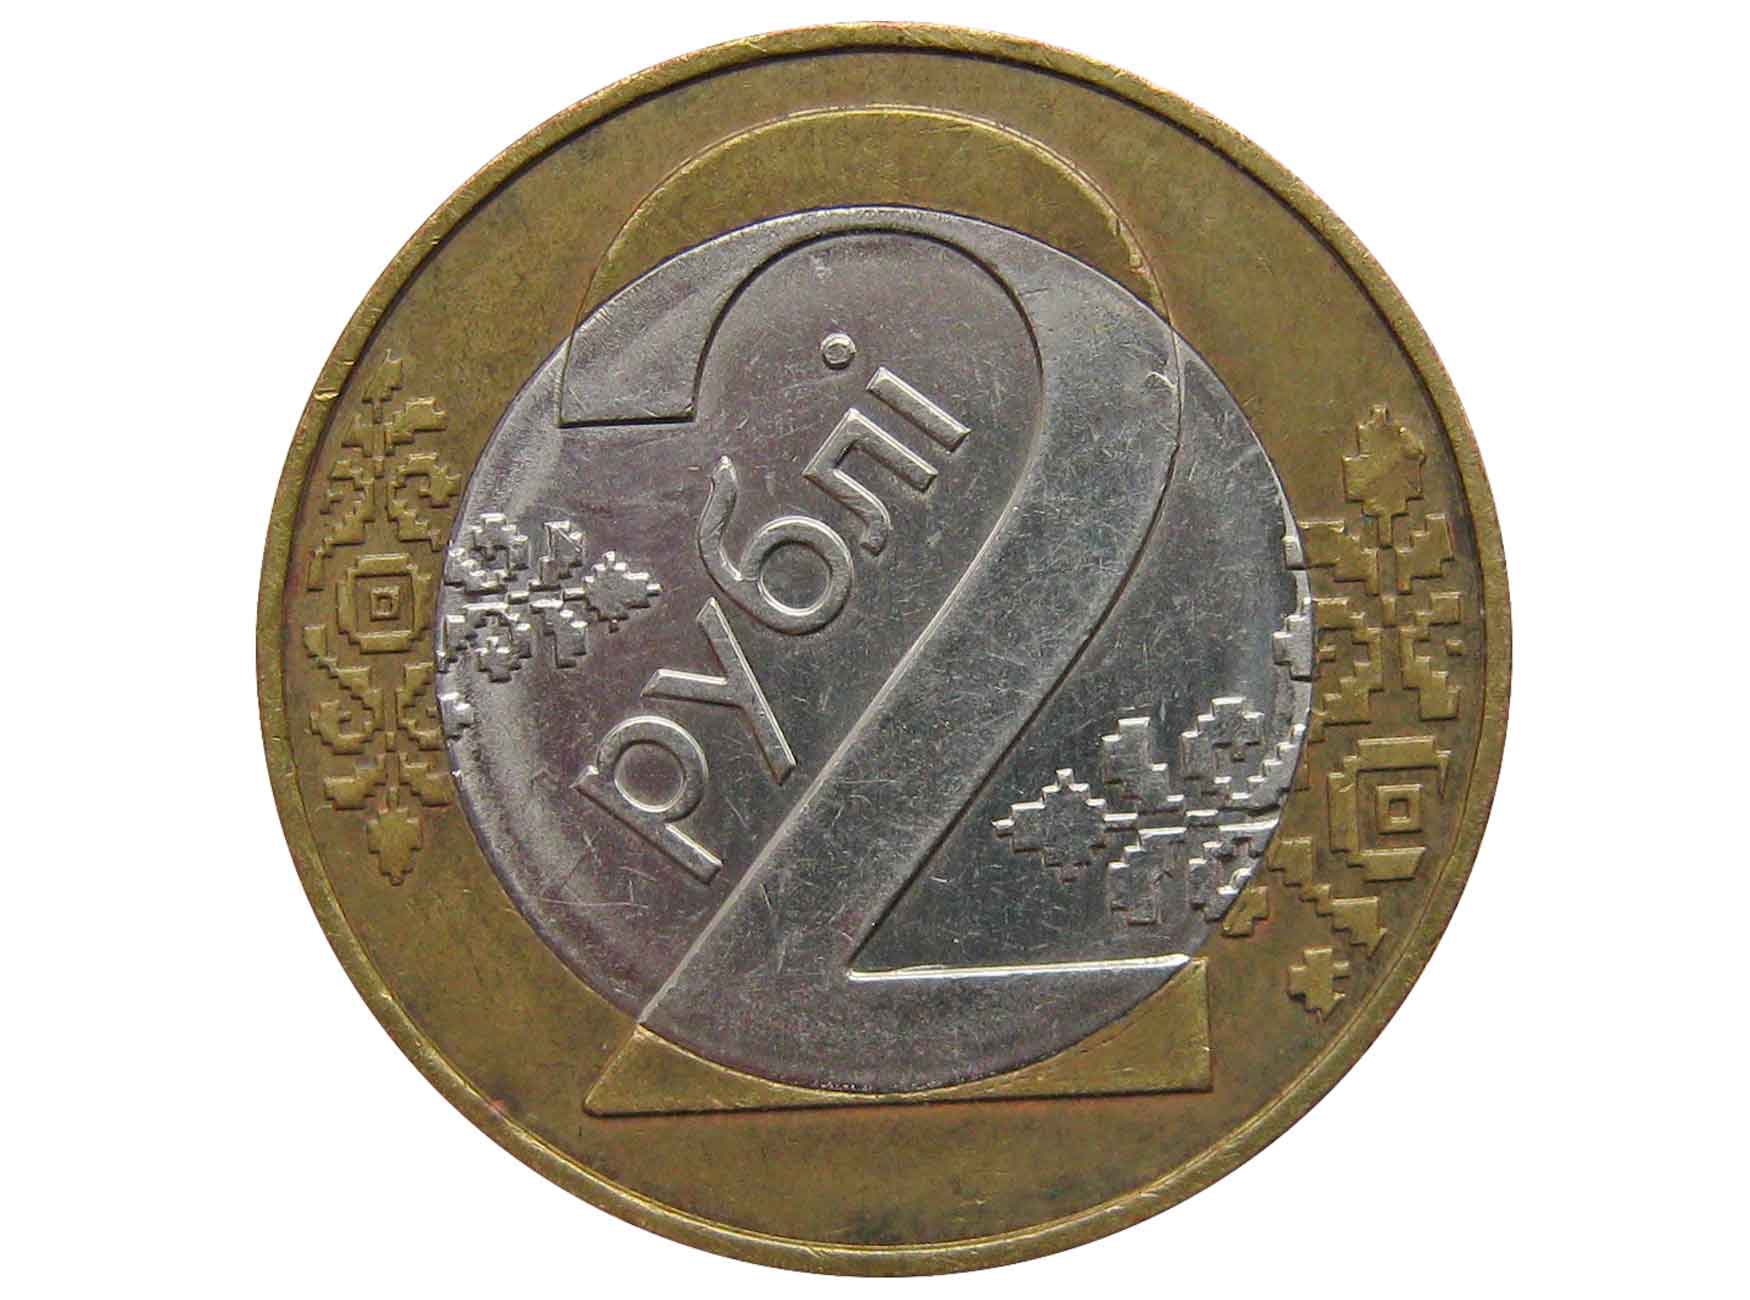 1 бел рубль в рублях. Монета 2 рубля Беларусь. 2 Белорусских рубля монета. Монеты Белорусские 2009. Беларусь 2 рубля 2009.